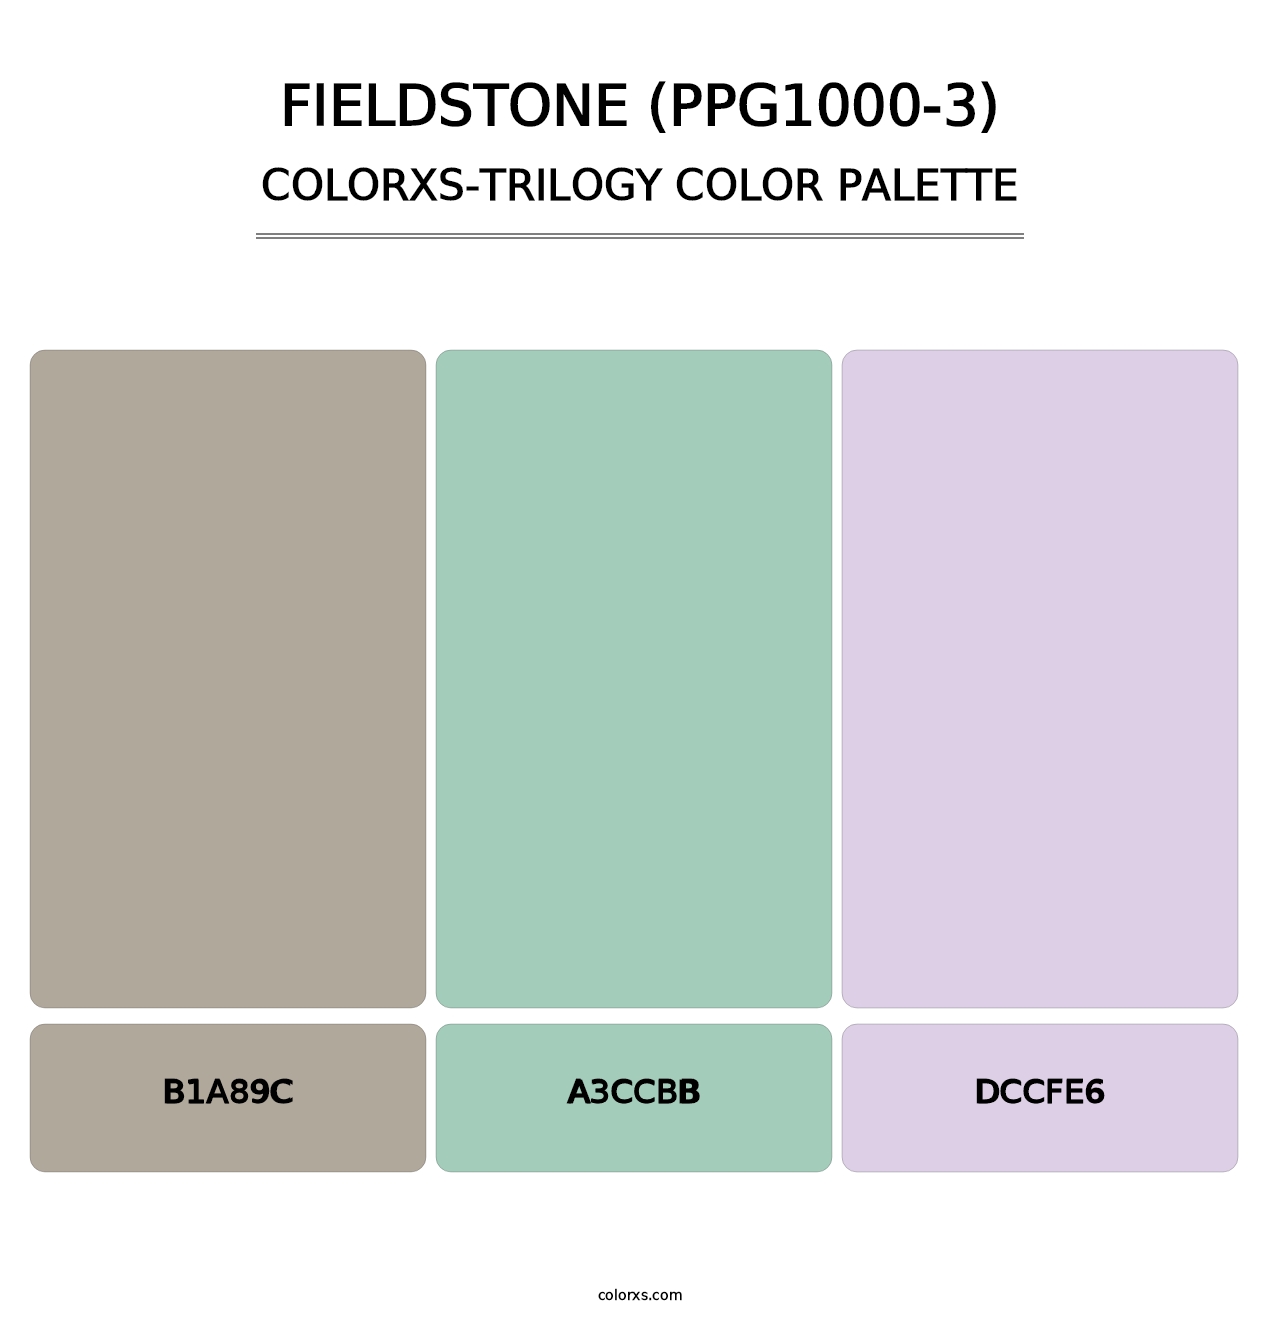 Fieldstone (PPG1000-3) - Colorxs Trilogy Palette